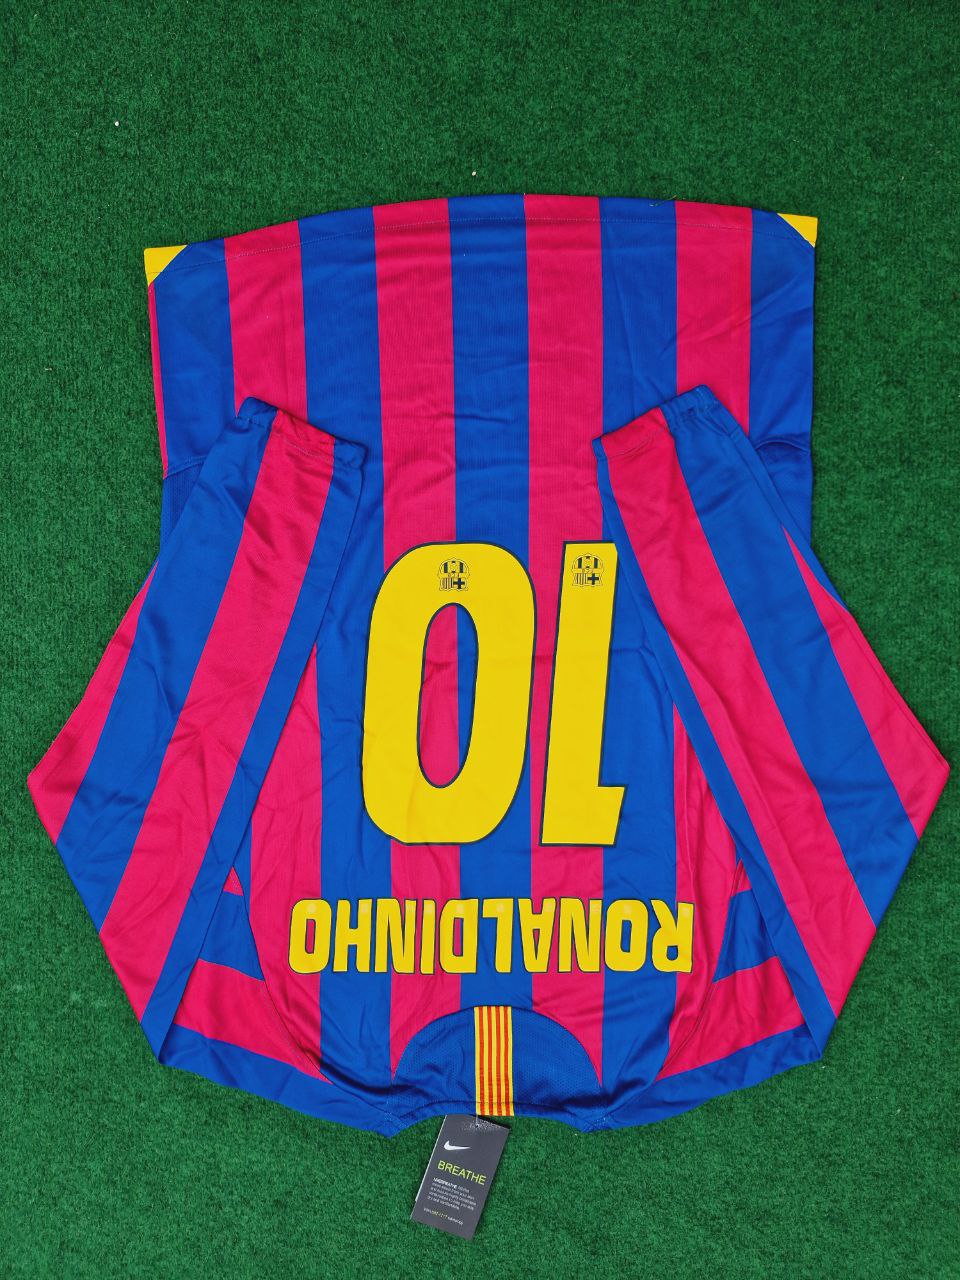 2014 Ronaldinho Barcelona  Gaucho Retro Jersey